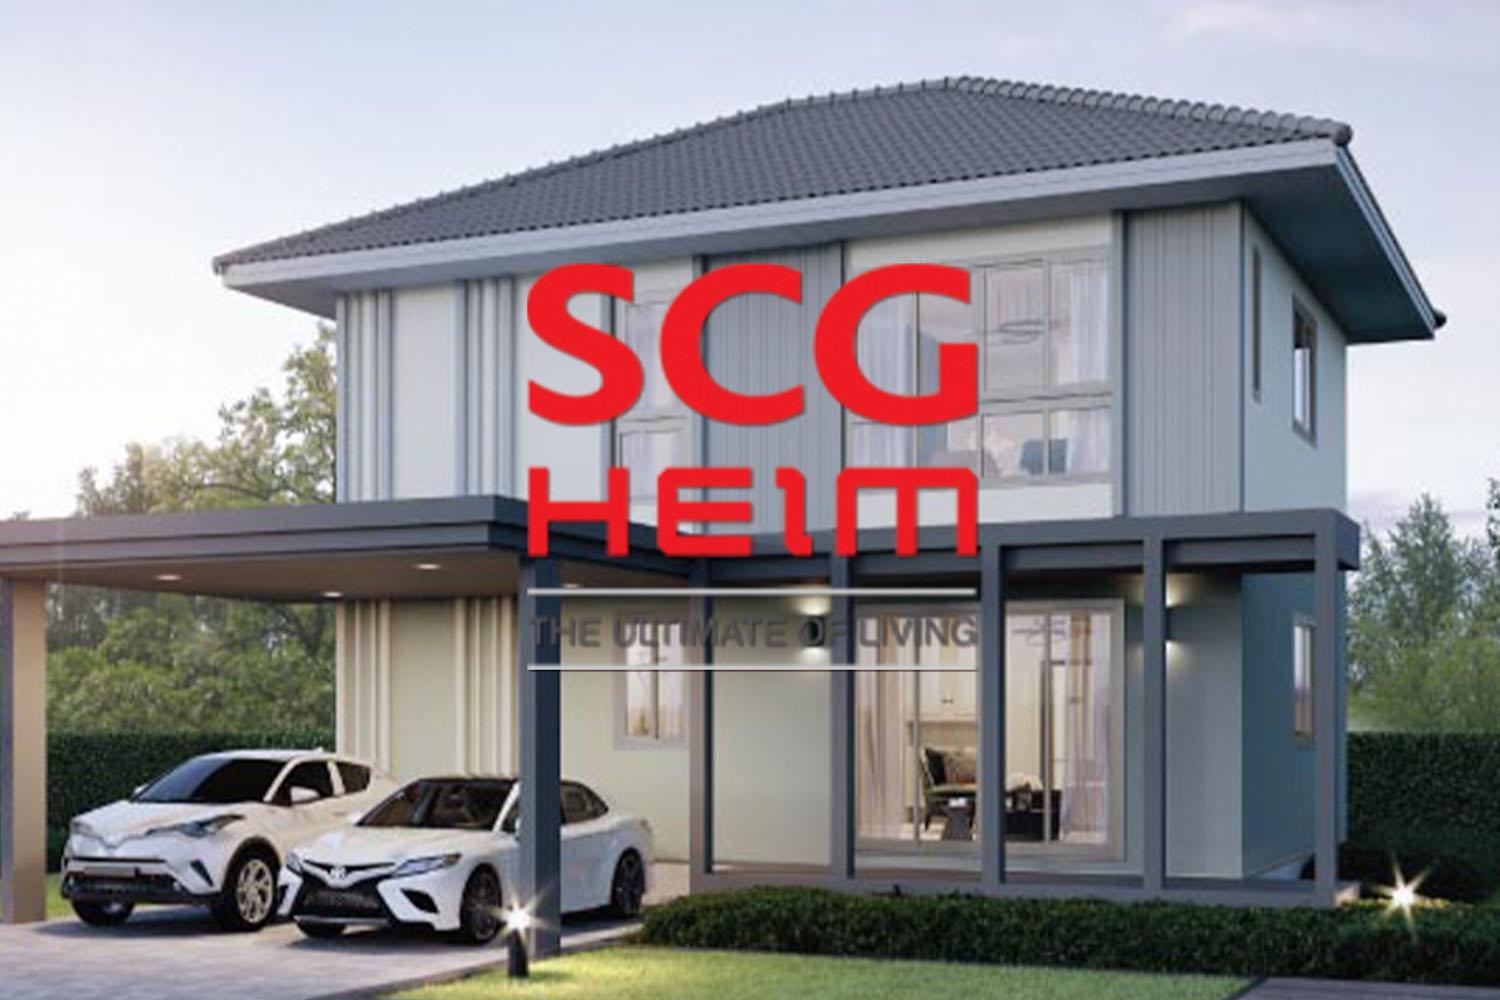 SCG-HEIM-trends-new-generation-build-house-SPACEBAR-Hero